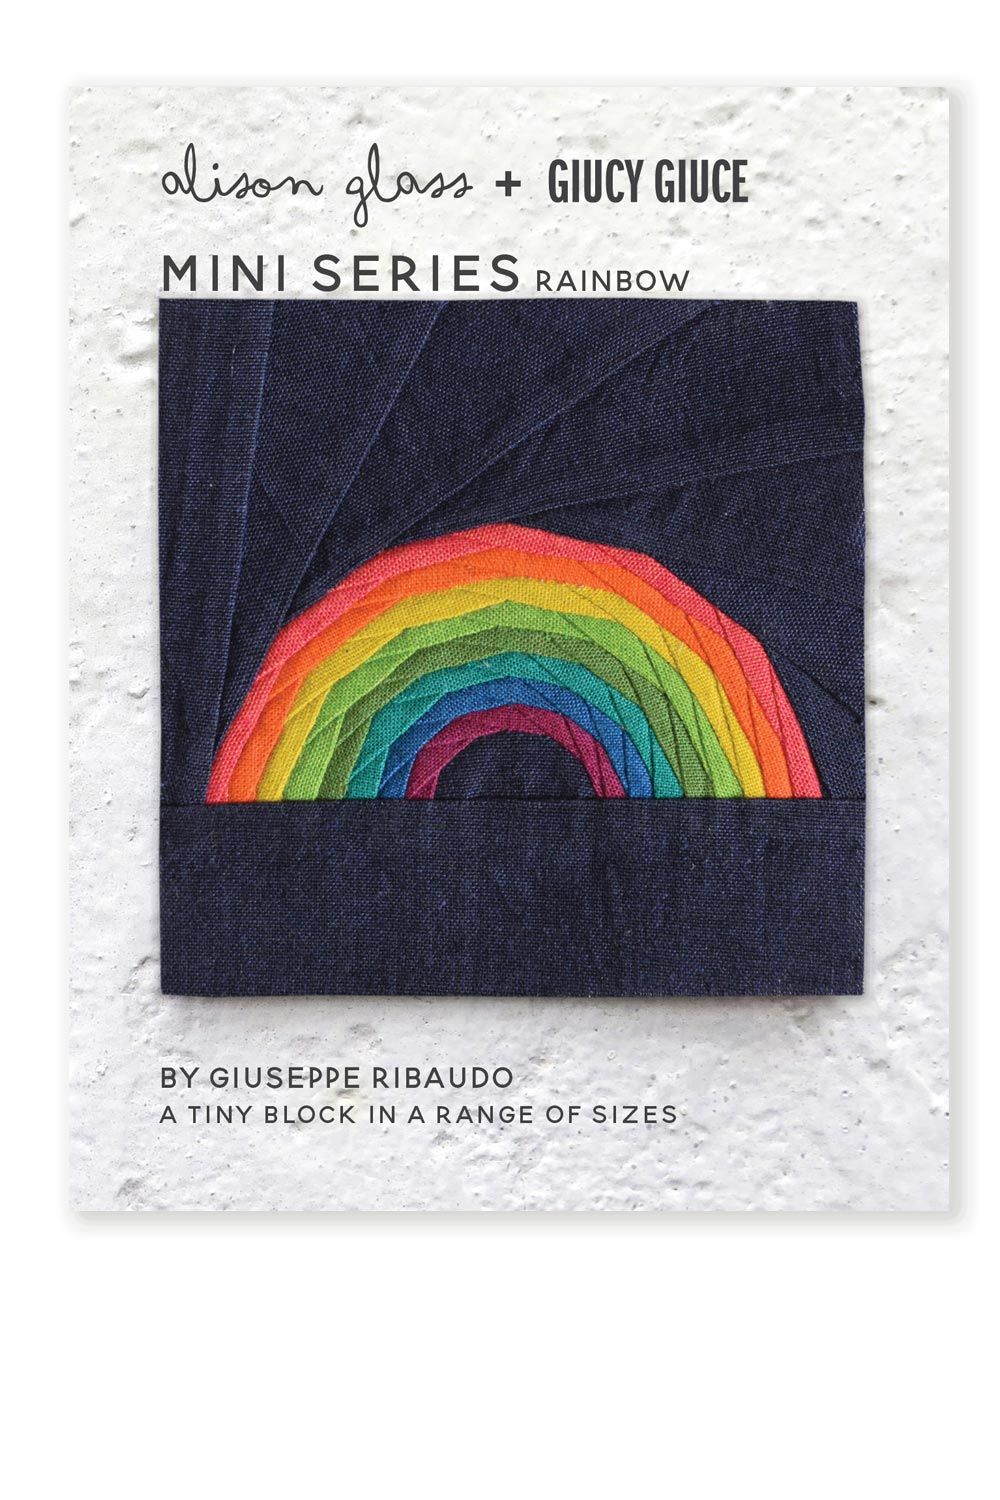 NEW Mini Series Rainbow Alison Glass + Giucy Giuce Quilt Mini Block Pattern